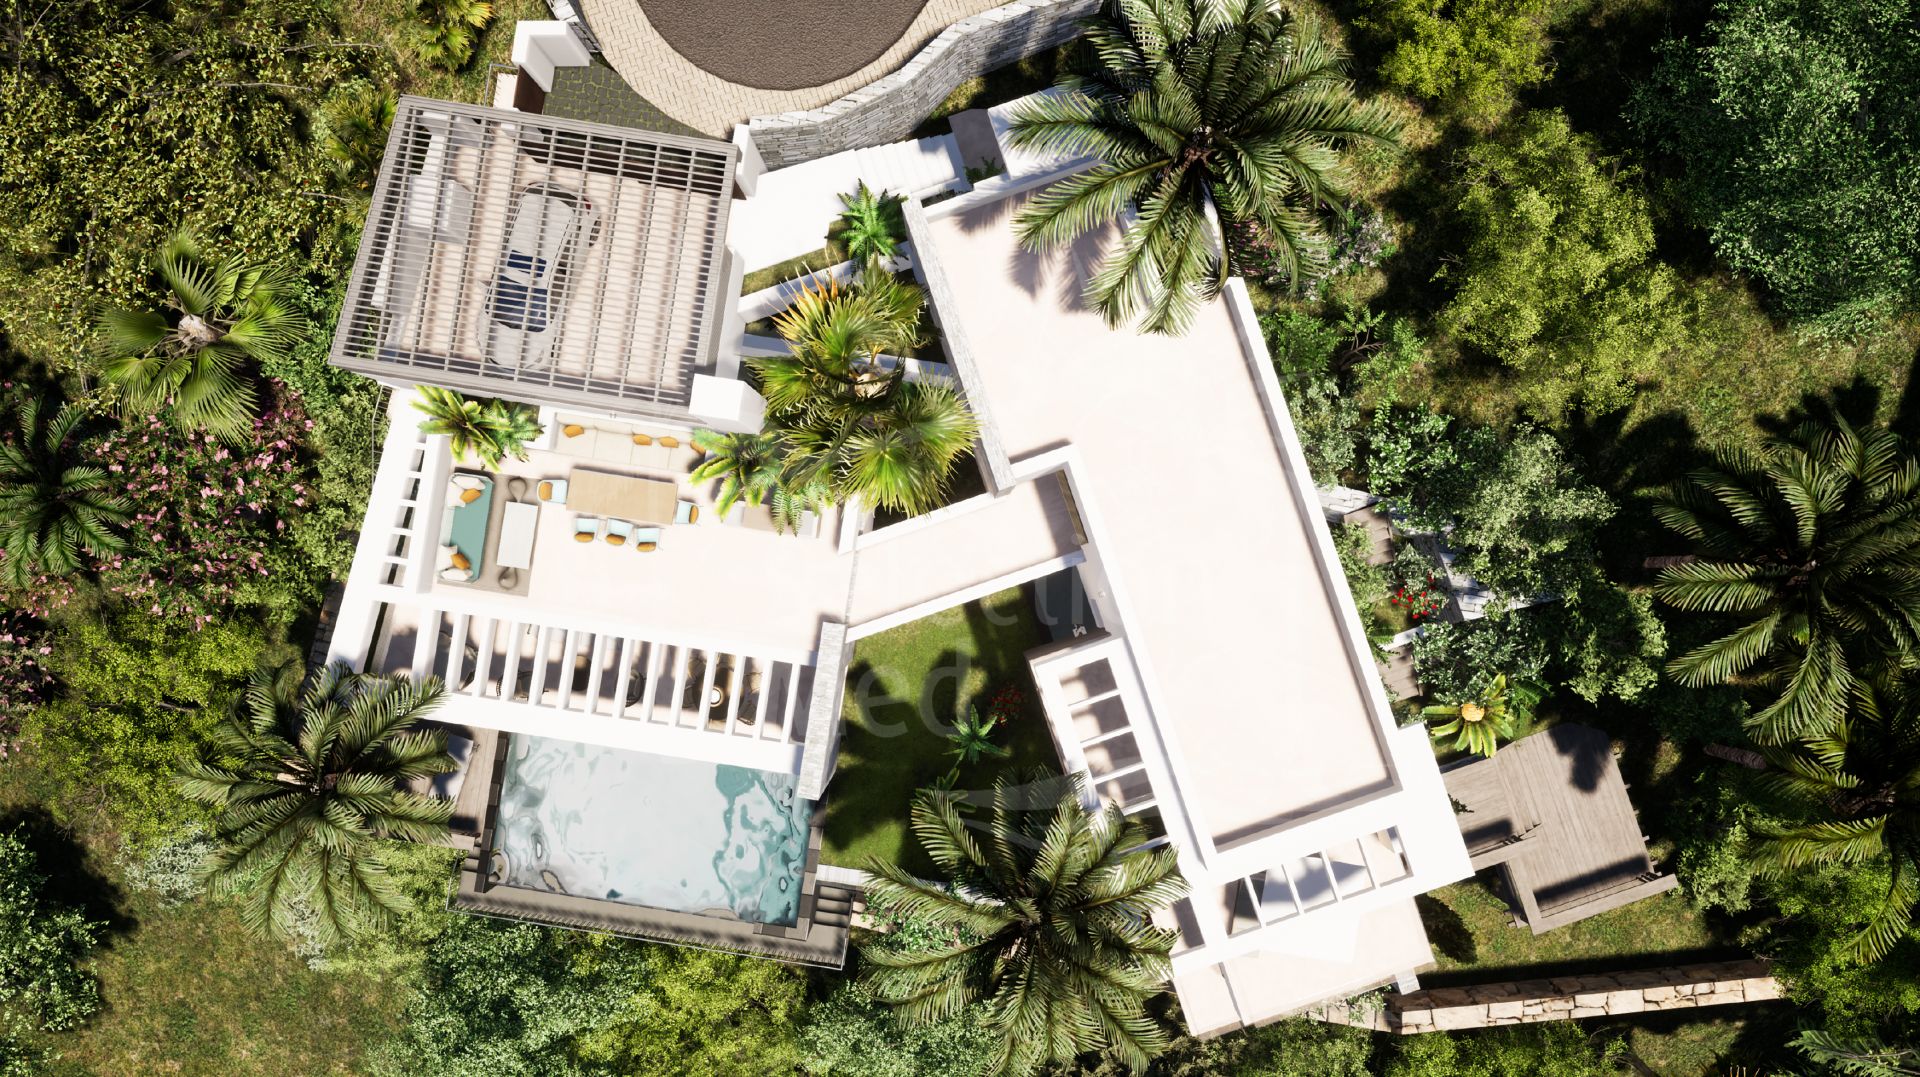 Stunning state-of-art and eco-friendly villa under construction in El Herrojo, La Quinta.